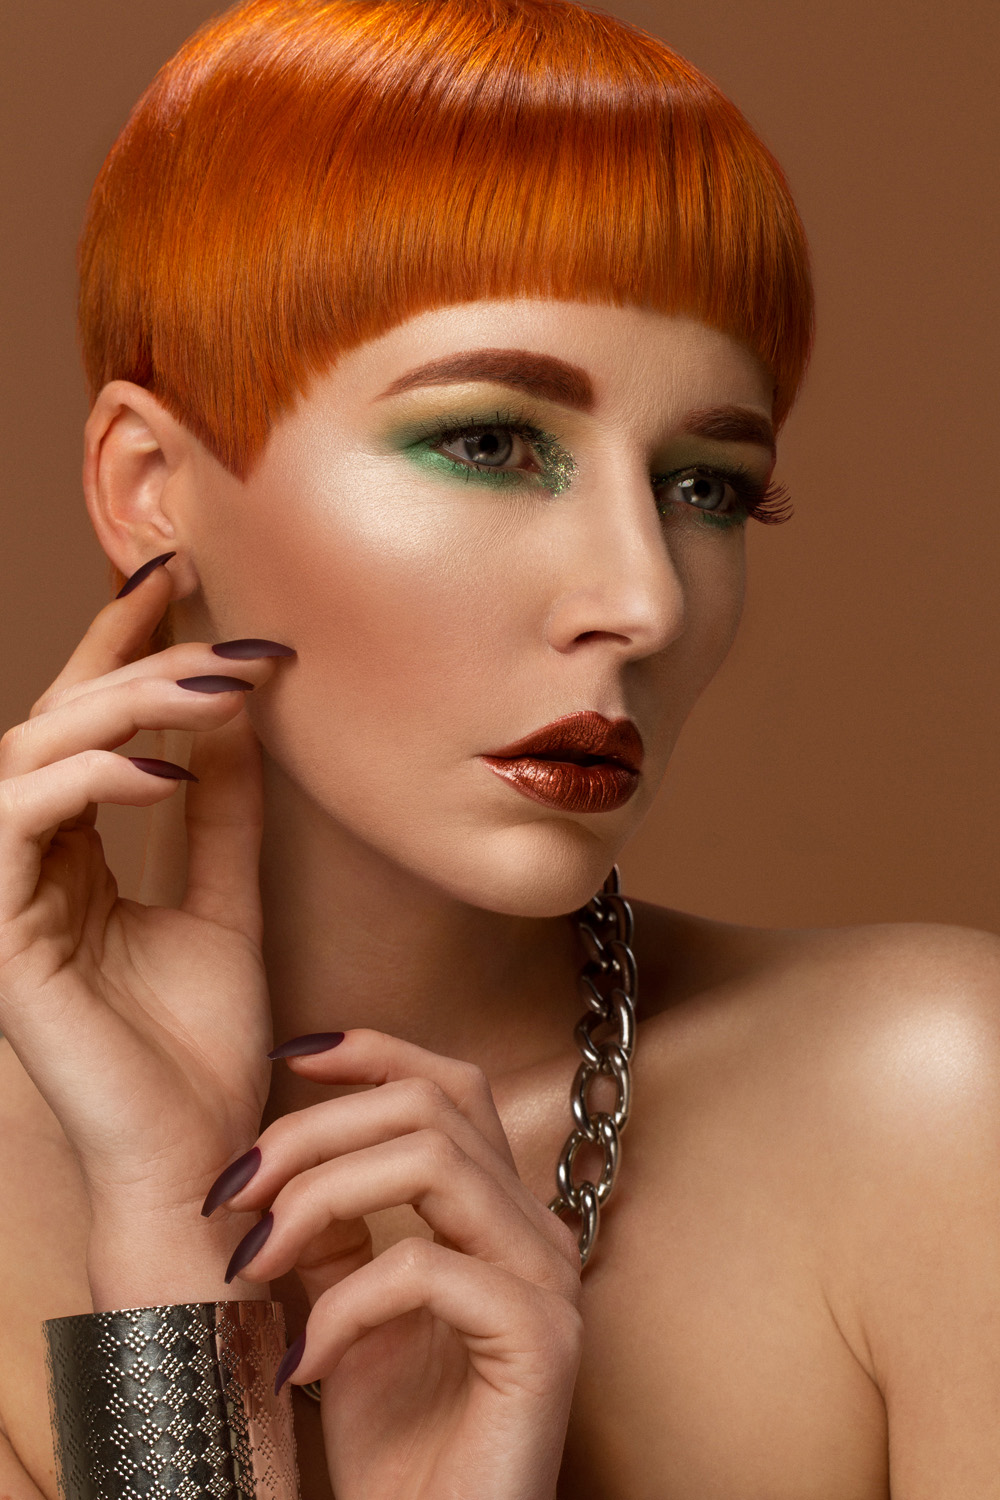 Make-up by Chrissie McKenna, hair by Clive Moxhay (Koots salon) Taken at Trident studio